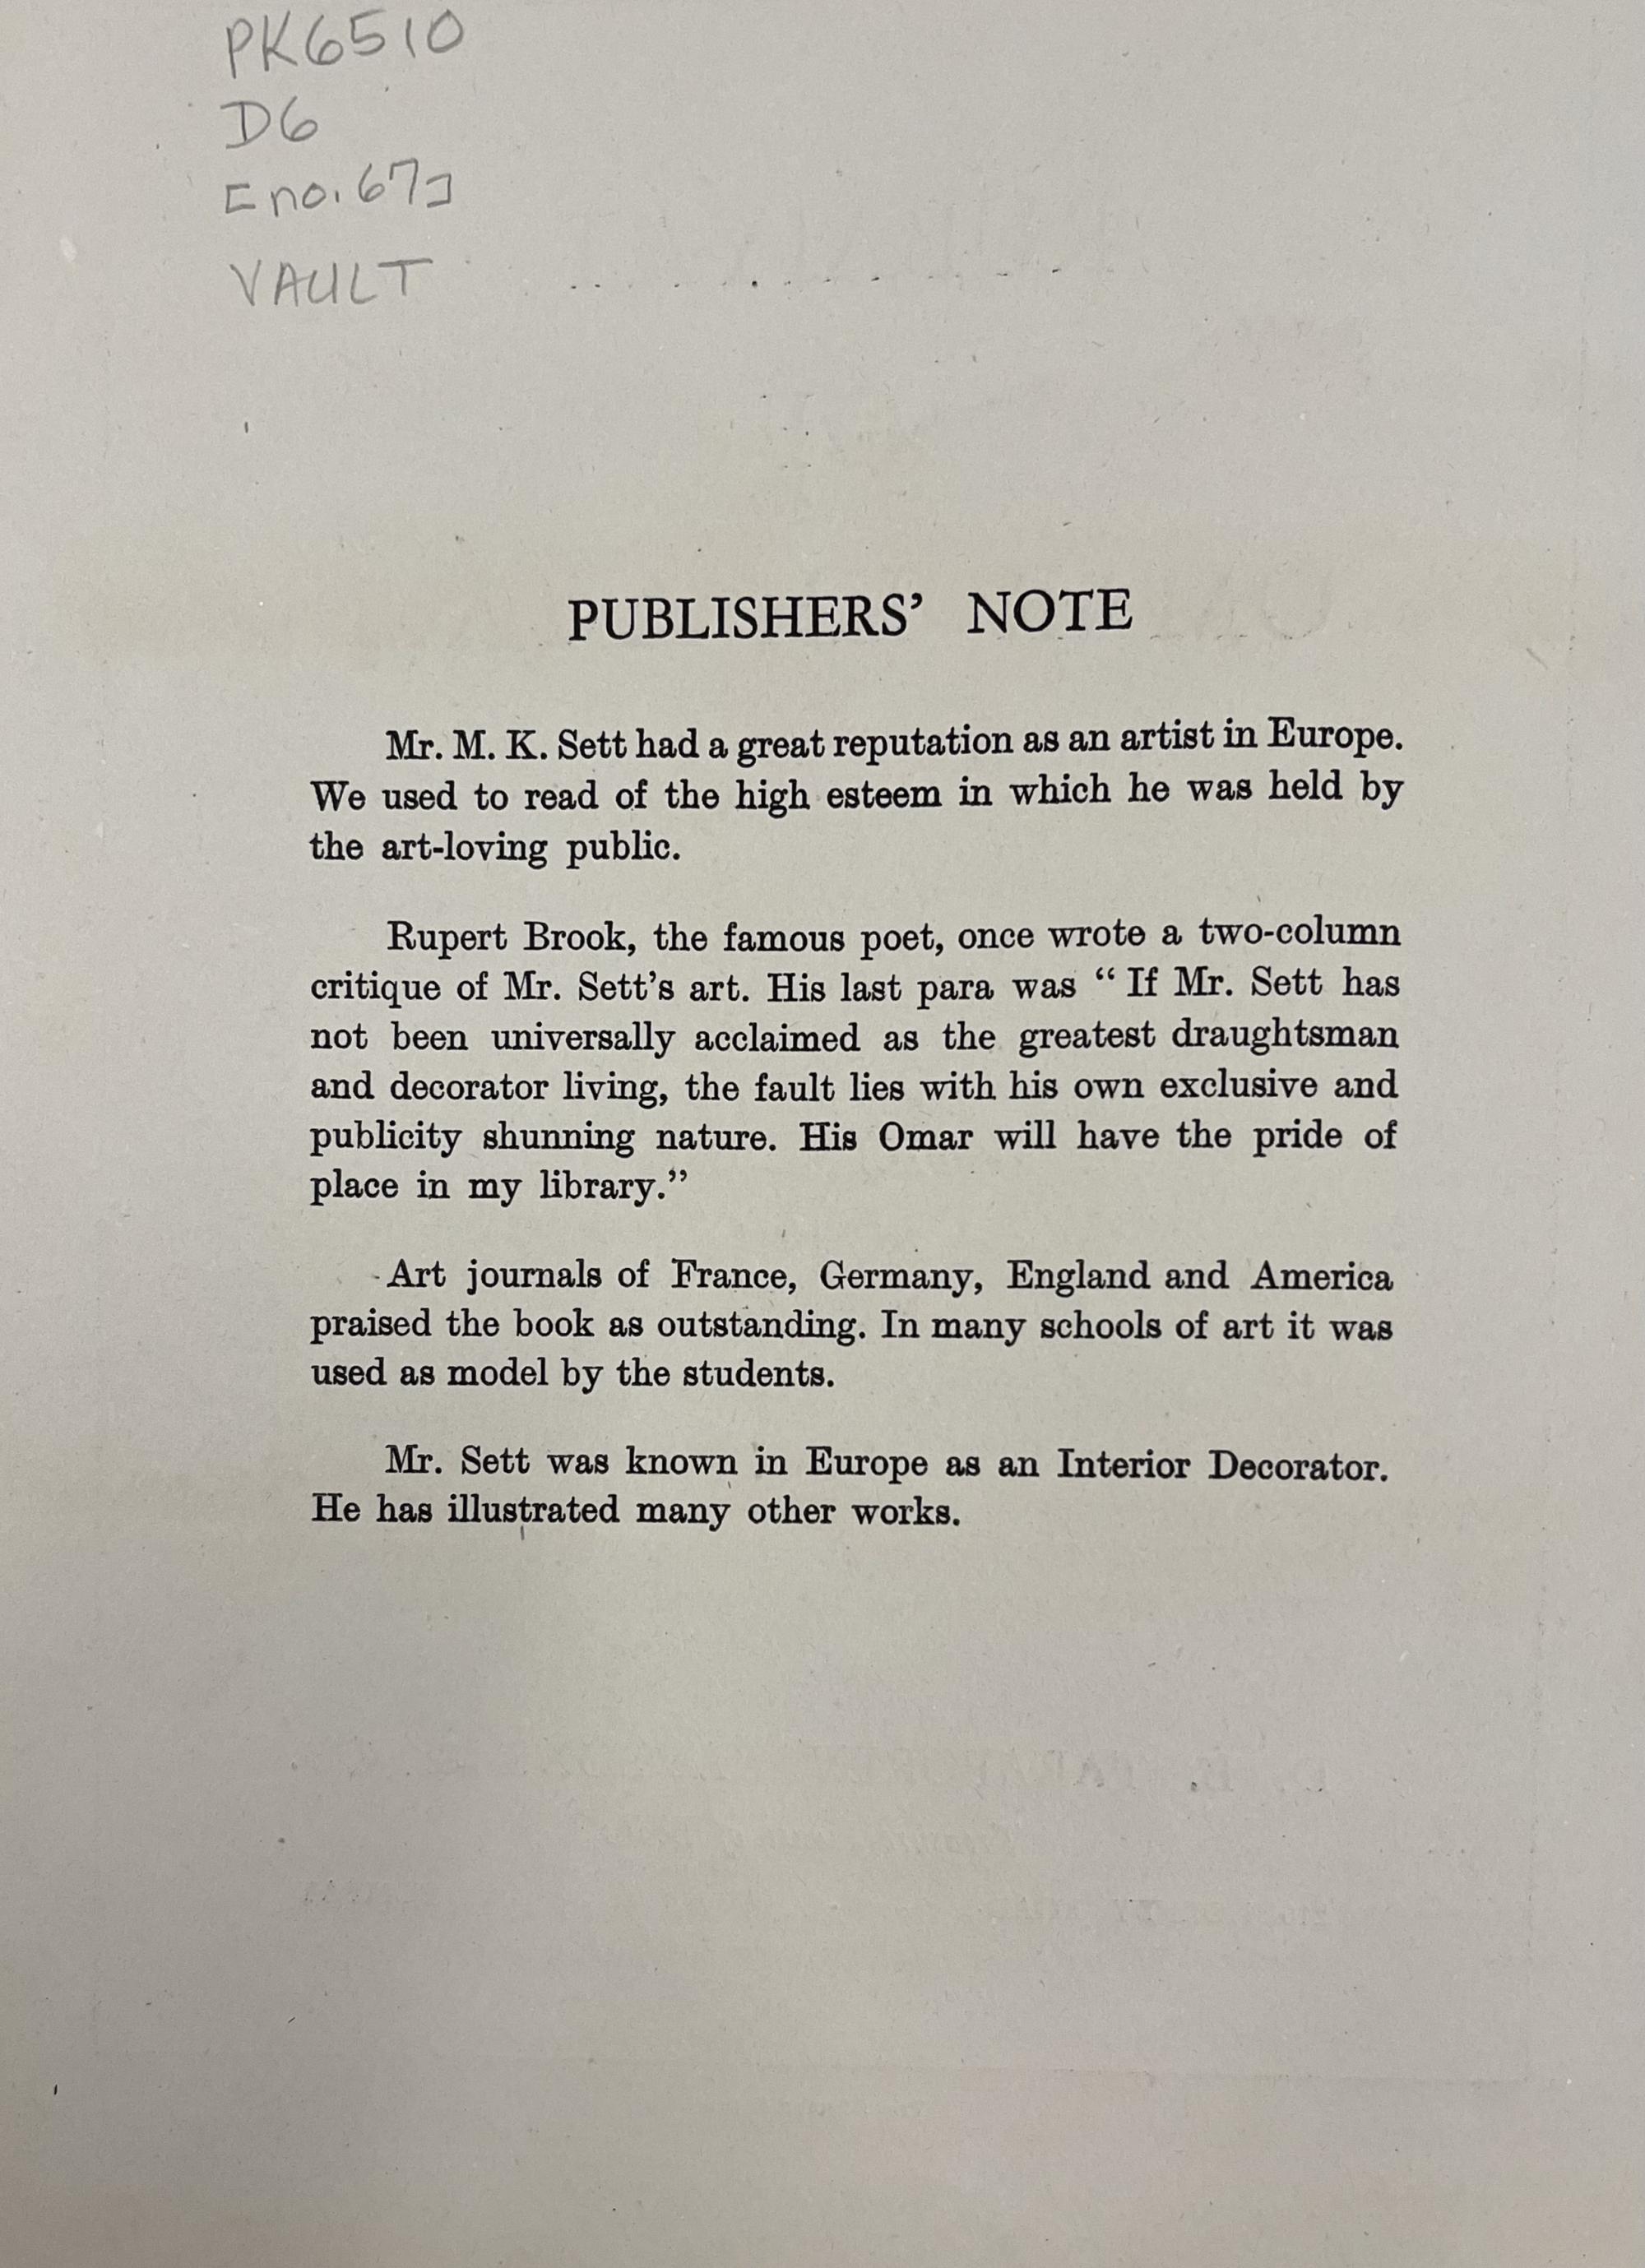 publishers' note to the 1946 edition of Rubáiyát of Omar Khayyám about illustrator M.K. Sett